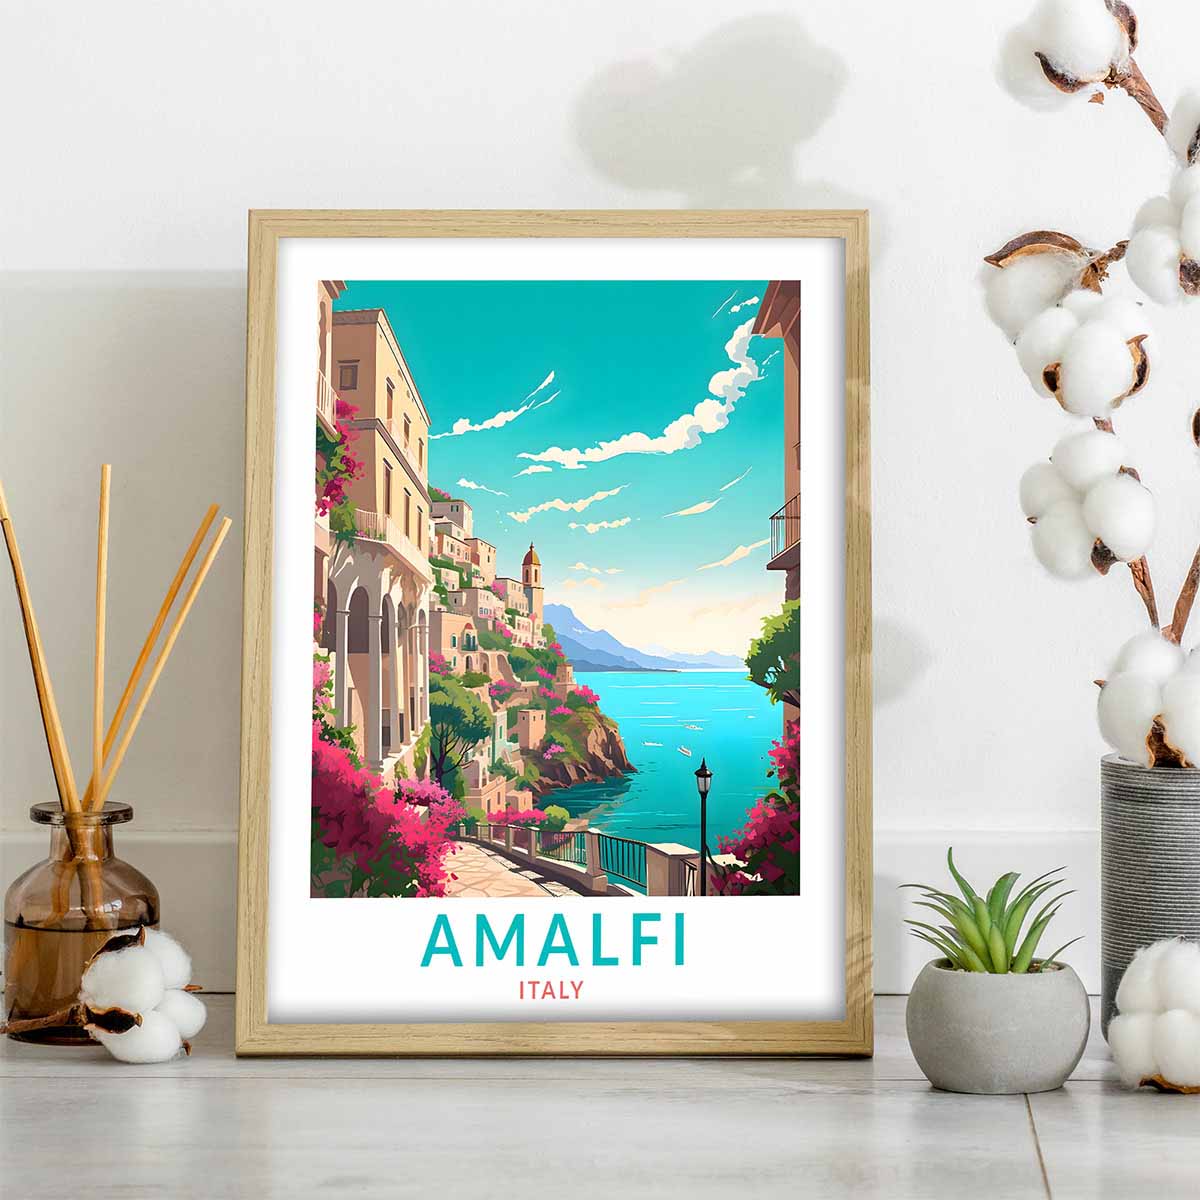 Amalfi Italy Travel Poster - Elegant Home Décor